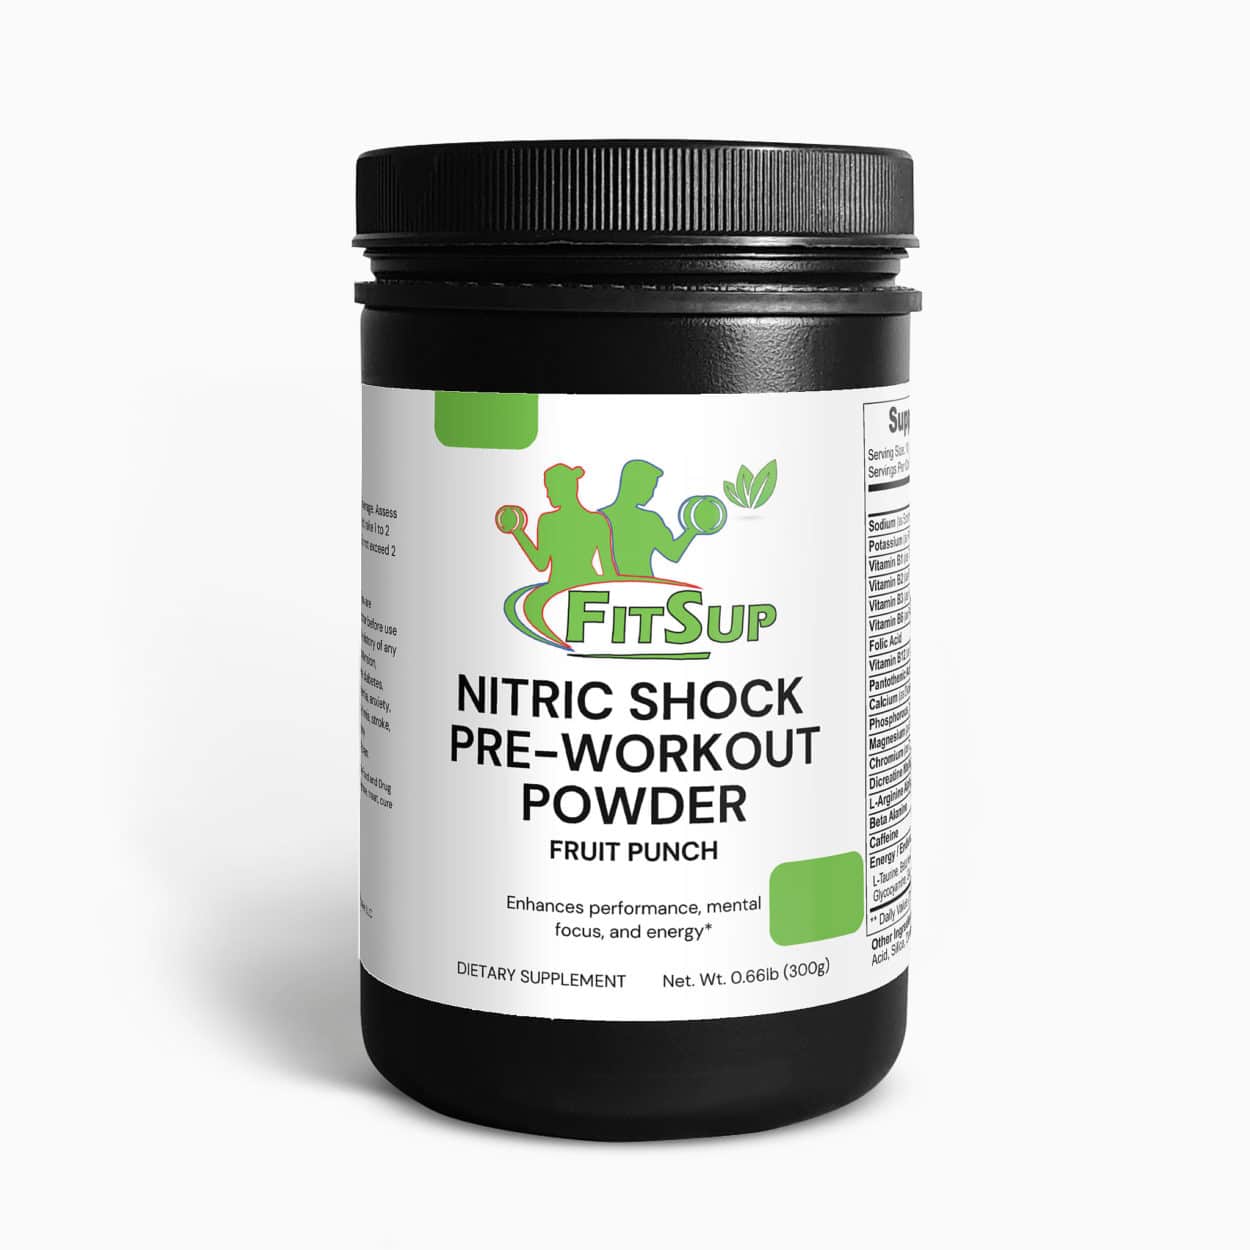 FitSup Nitric Shock Pre-Workout Powder (Fruit Punch)